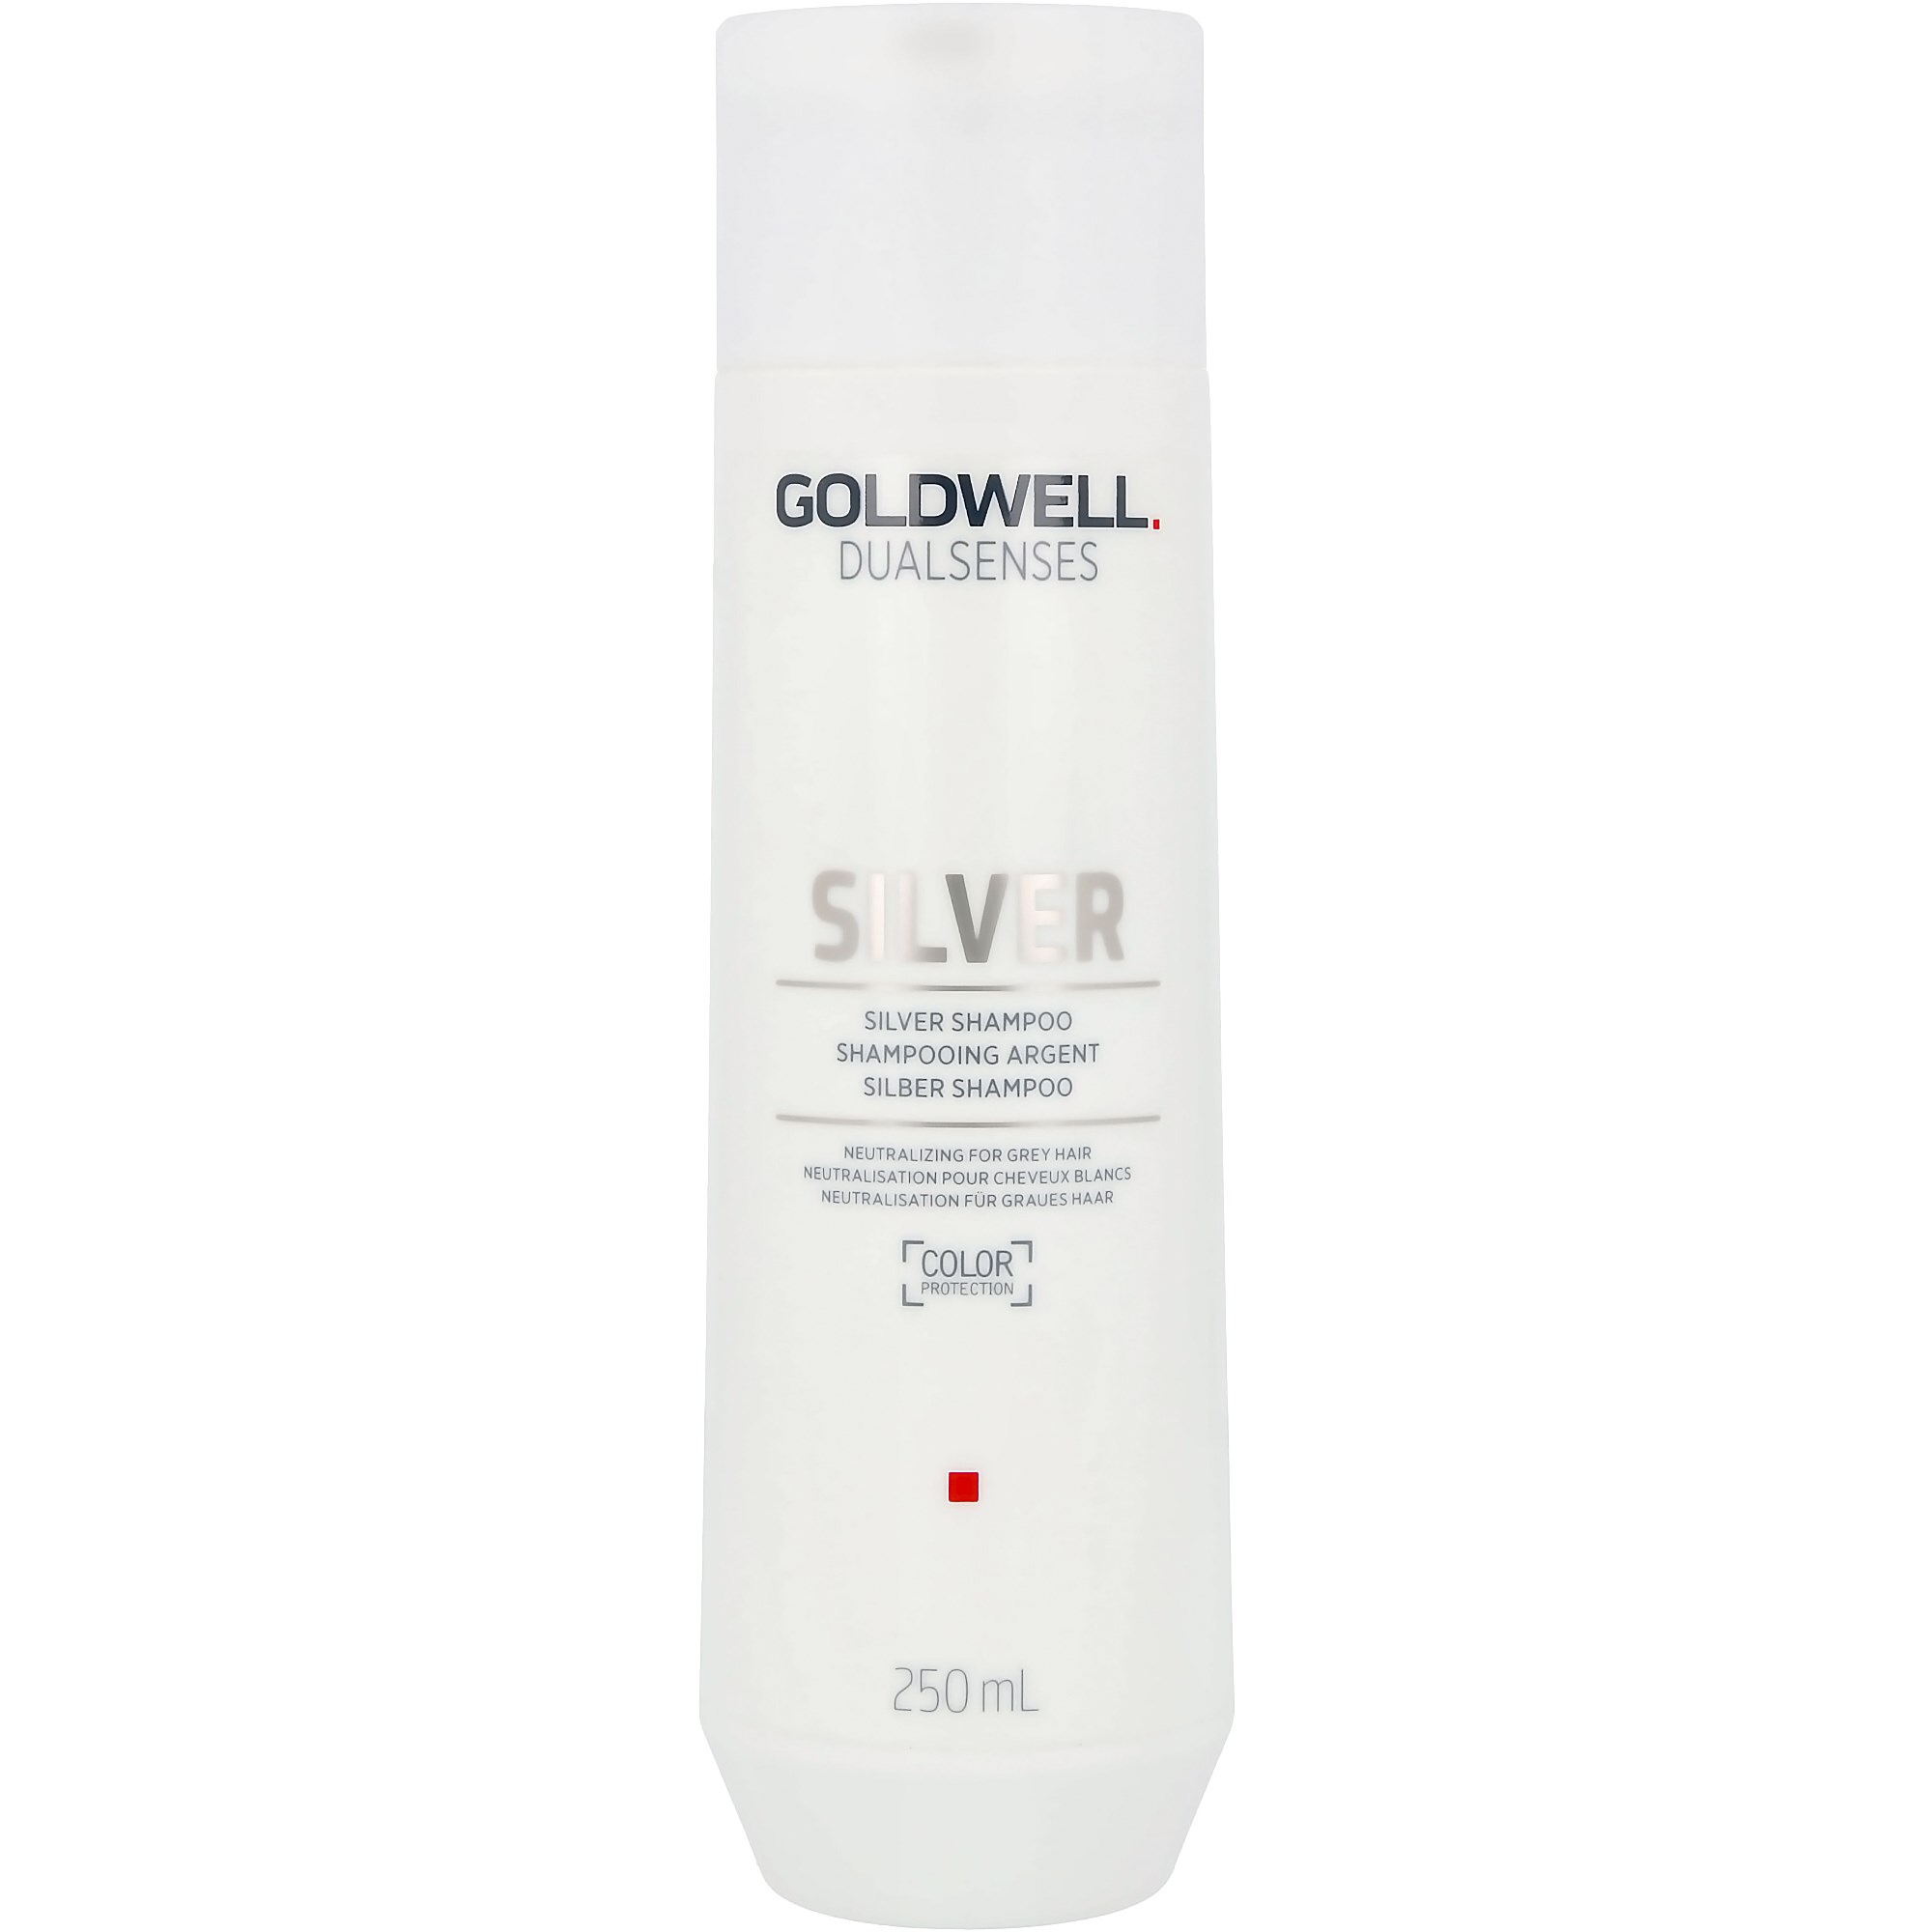 Bilde av Goldwell Silver Dualsenses Silver Shampoo 250 Ml